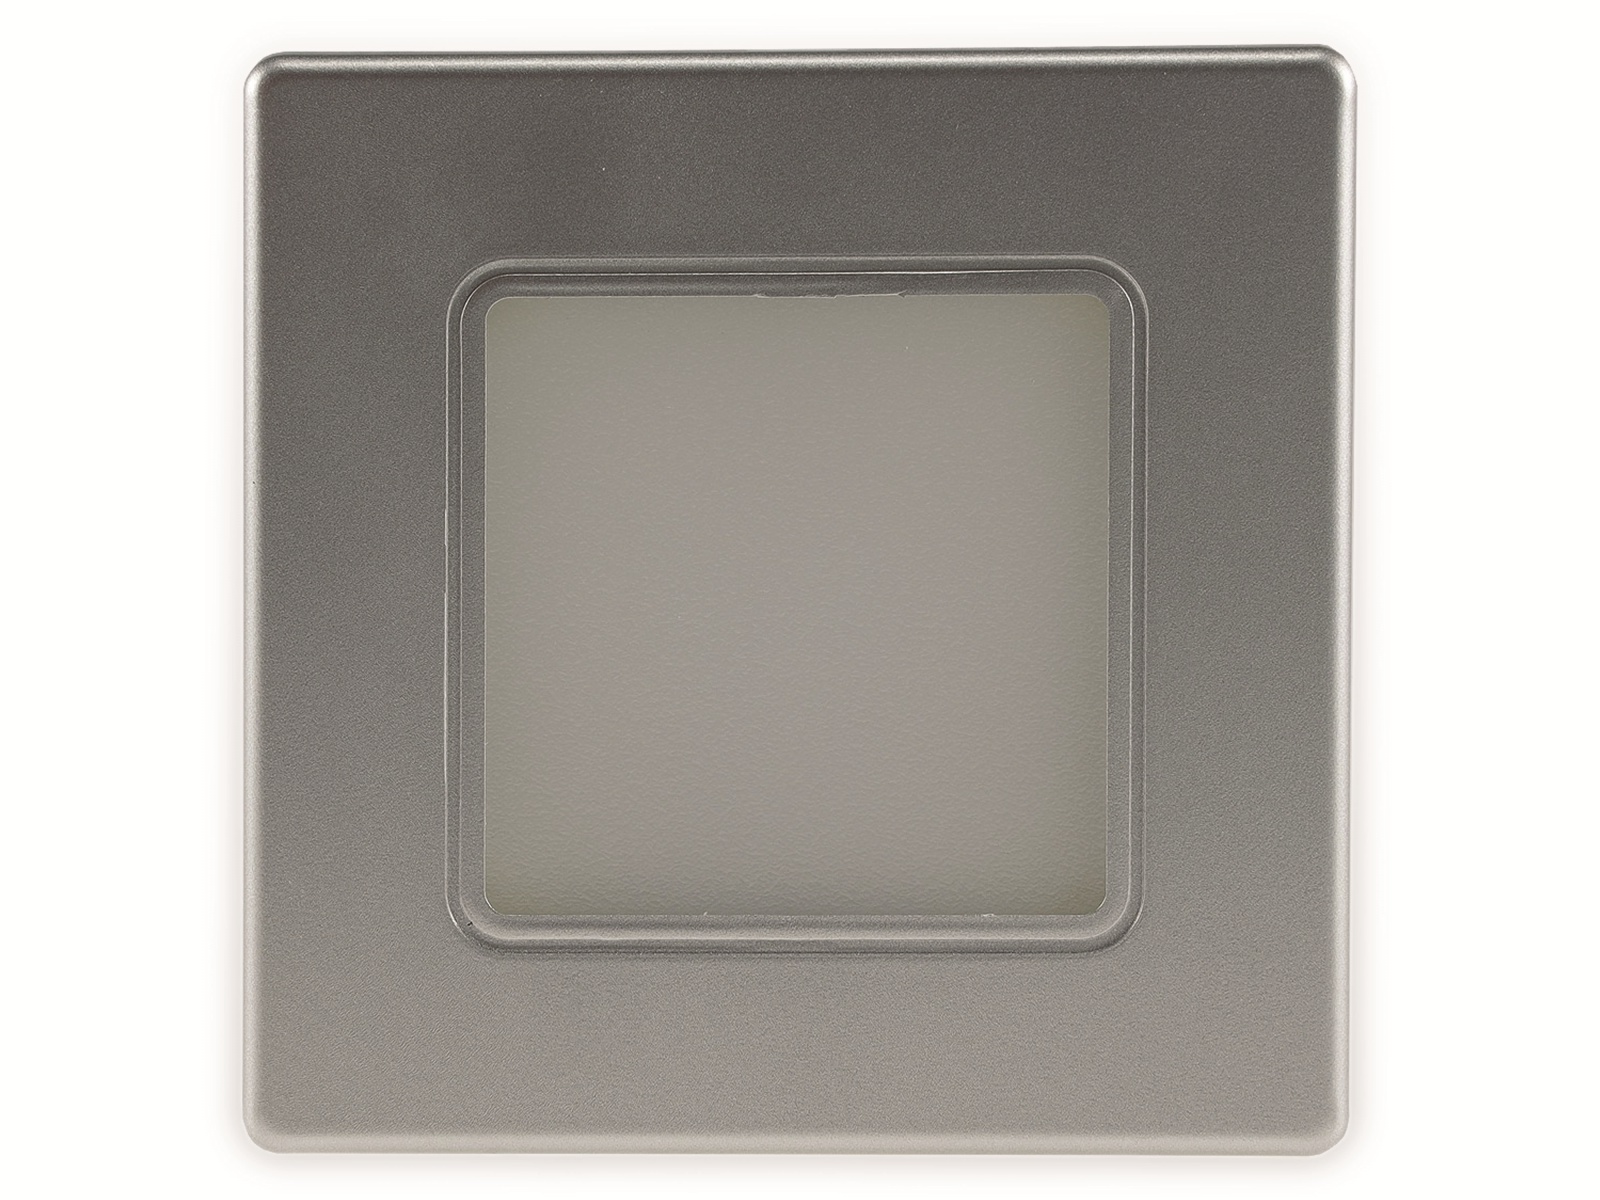 CHILITEC LED-Einbauleuchte EBL 86, 2,5 W, 3000 K, warmweiß, Rahmen silber